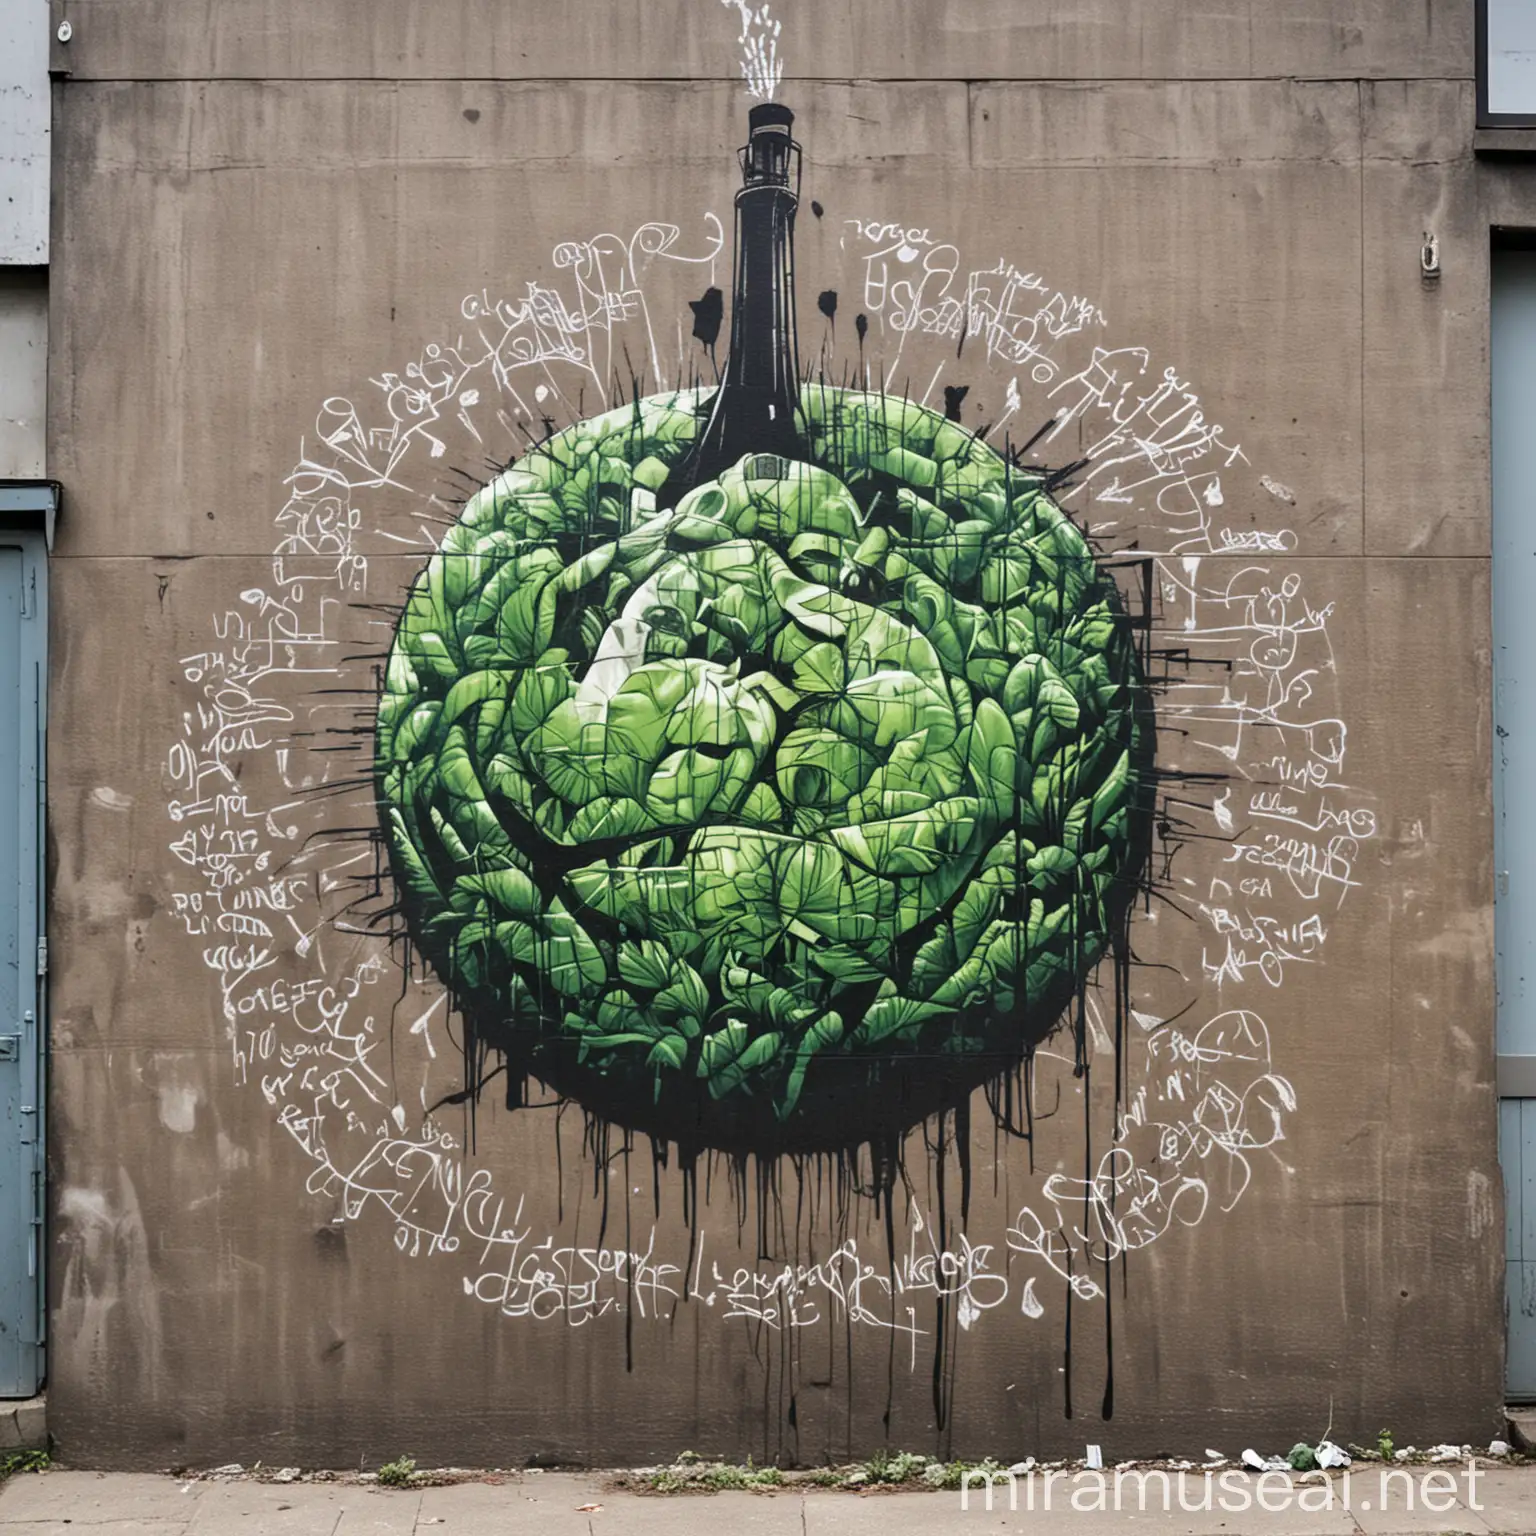 Urban Graffiti Art Depicting Sustainability in Vibrant Colors